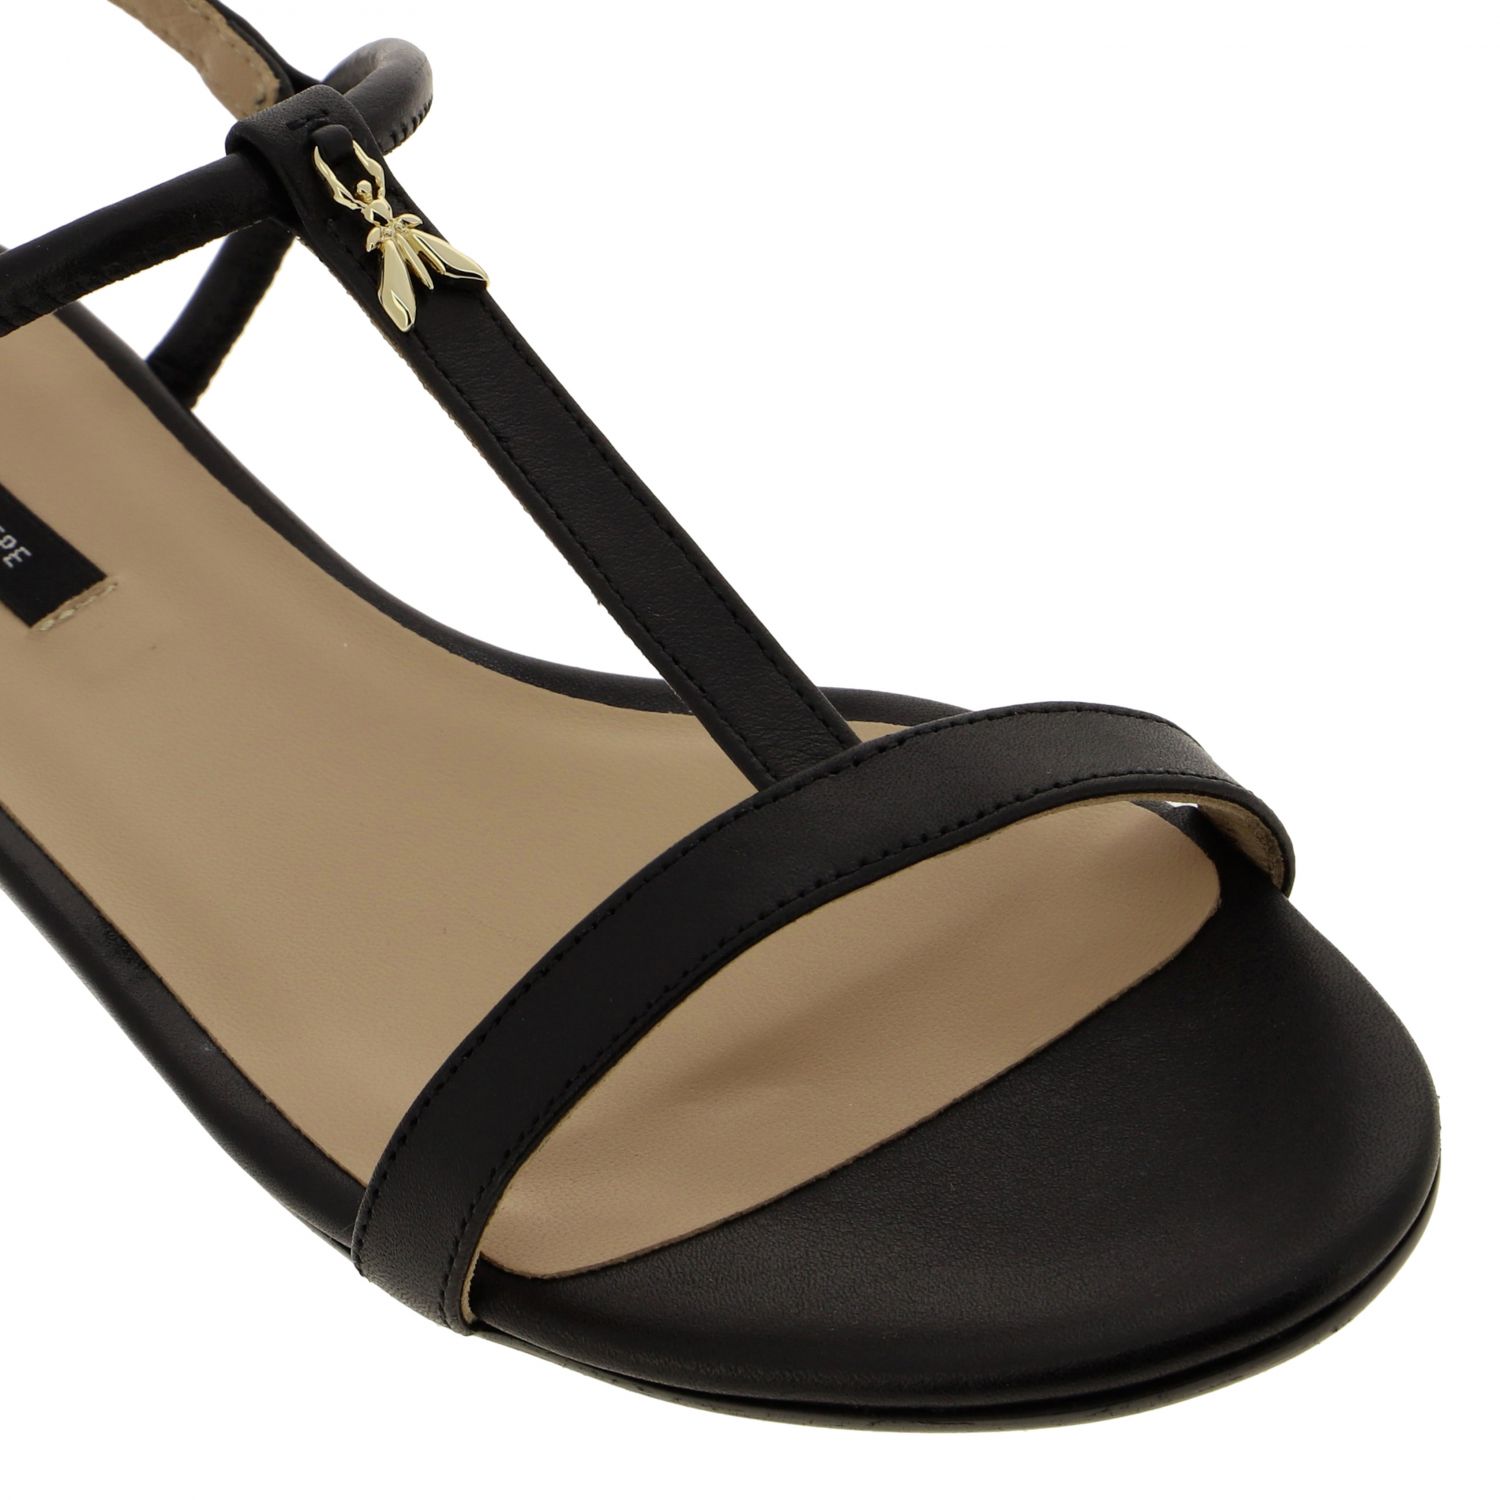 Patrizia Pepe Outlet: flat sandals for women - Black | Patrizia Pepe ...